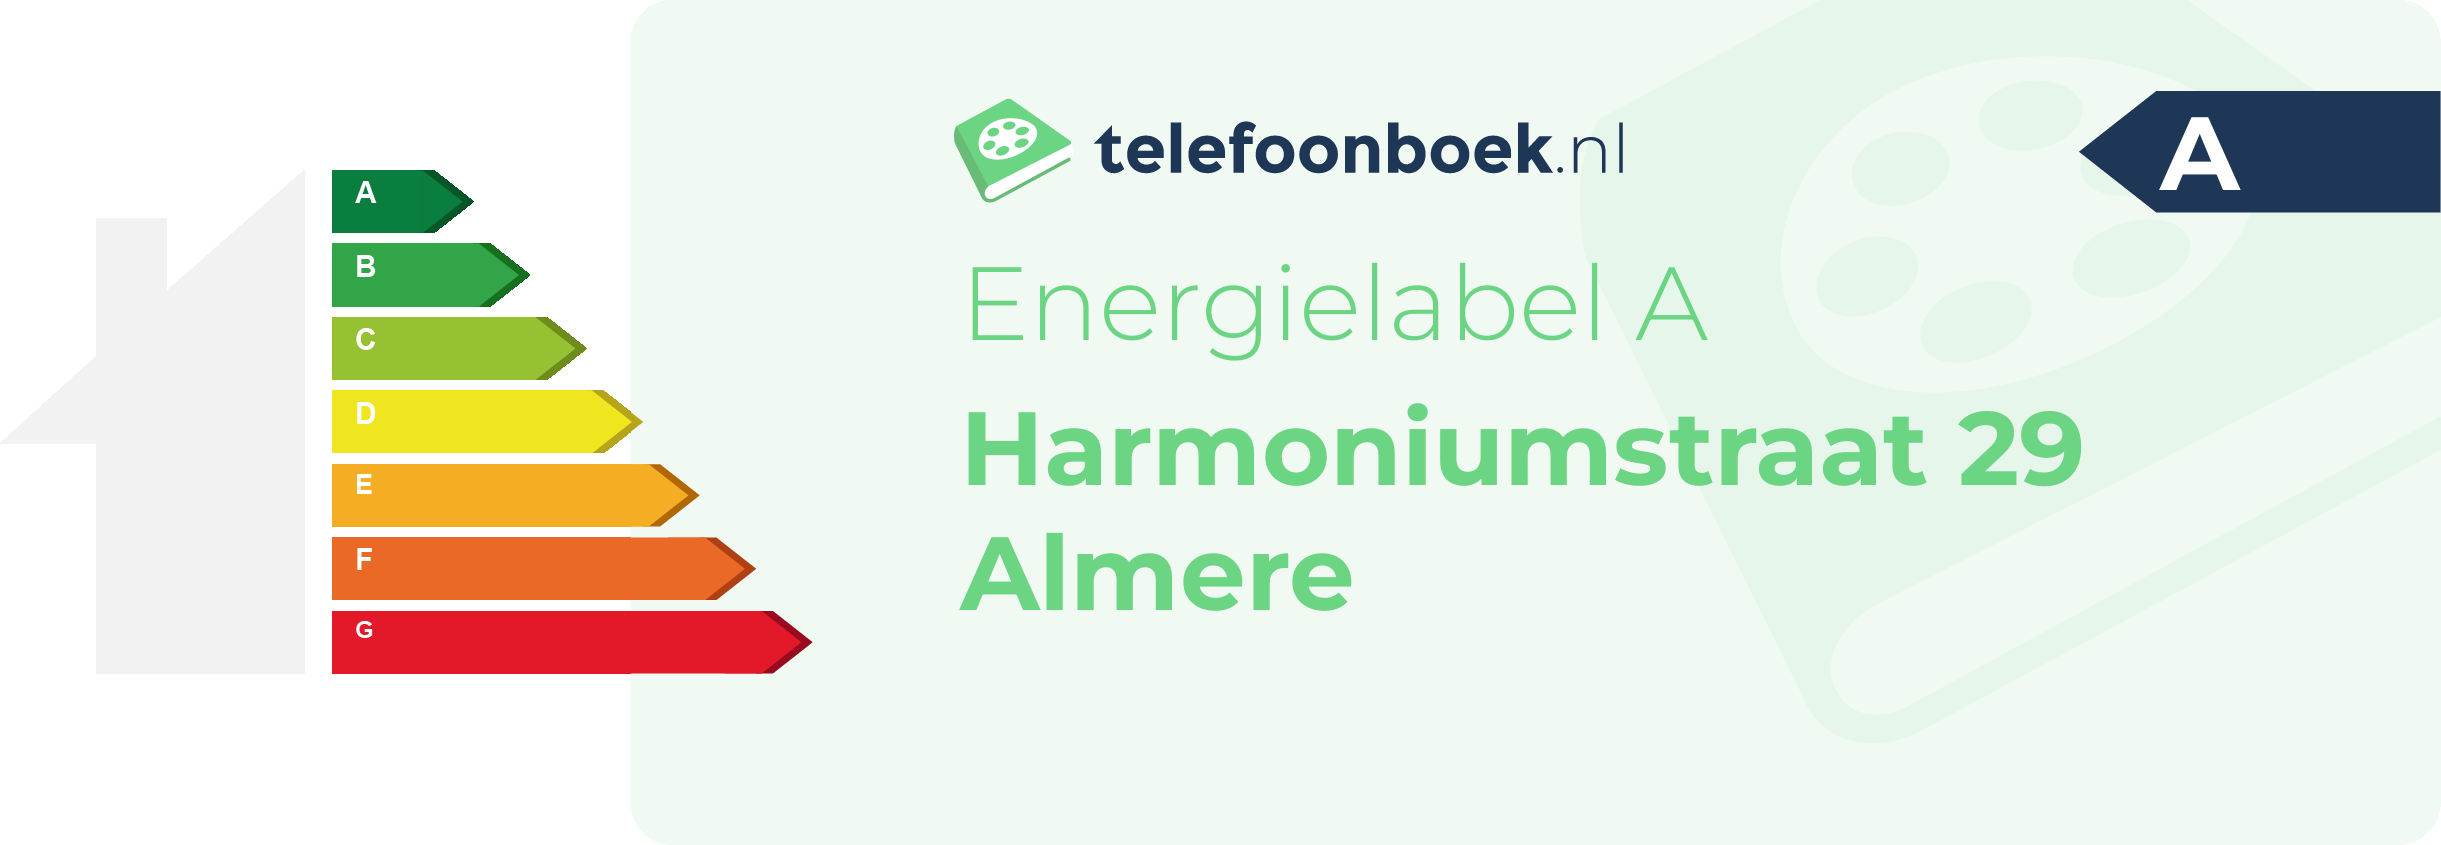 Energielabel Harmoniumstraat 29 Almere